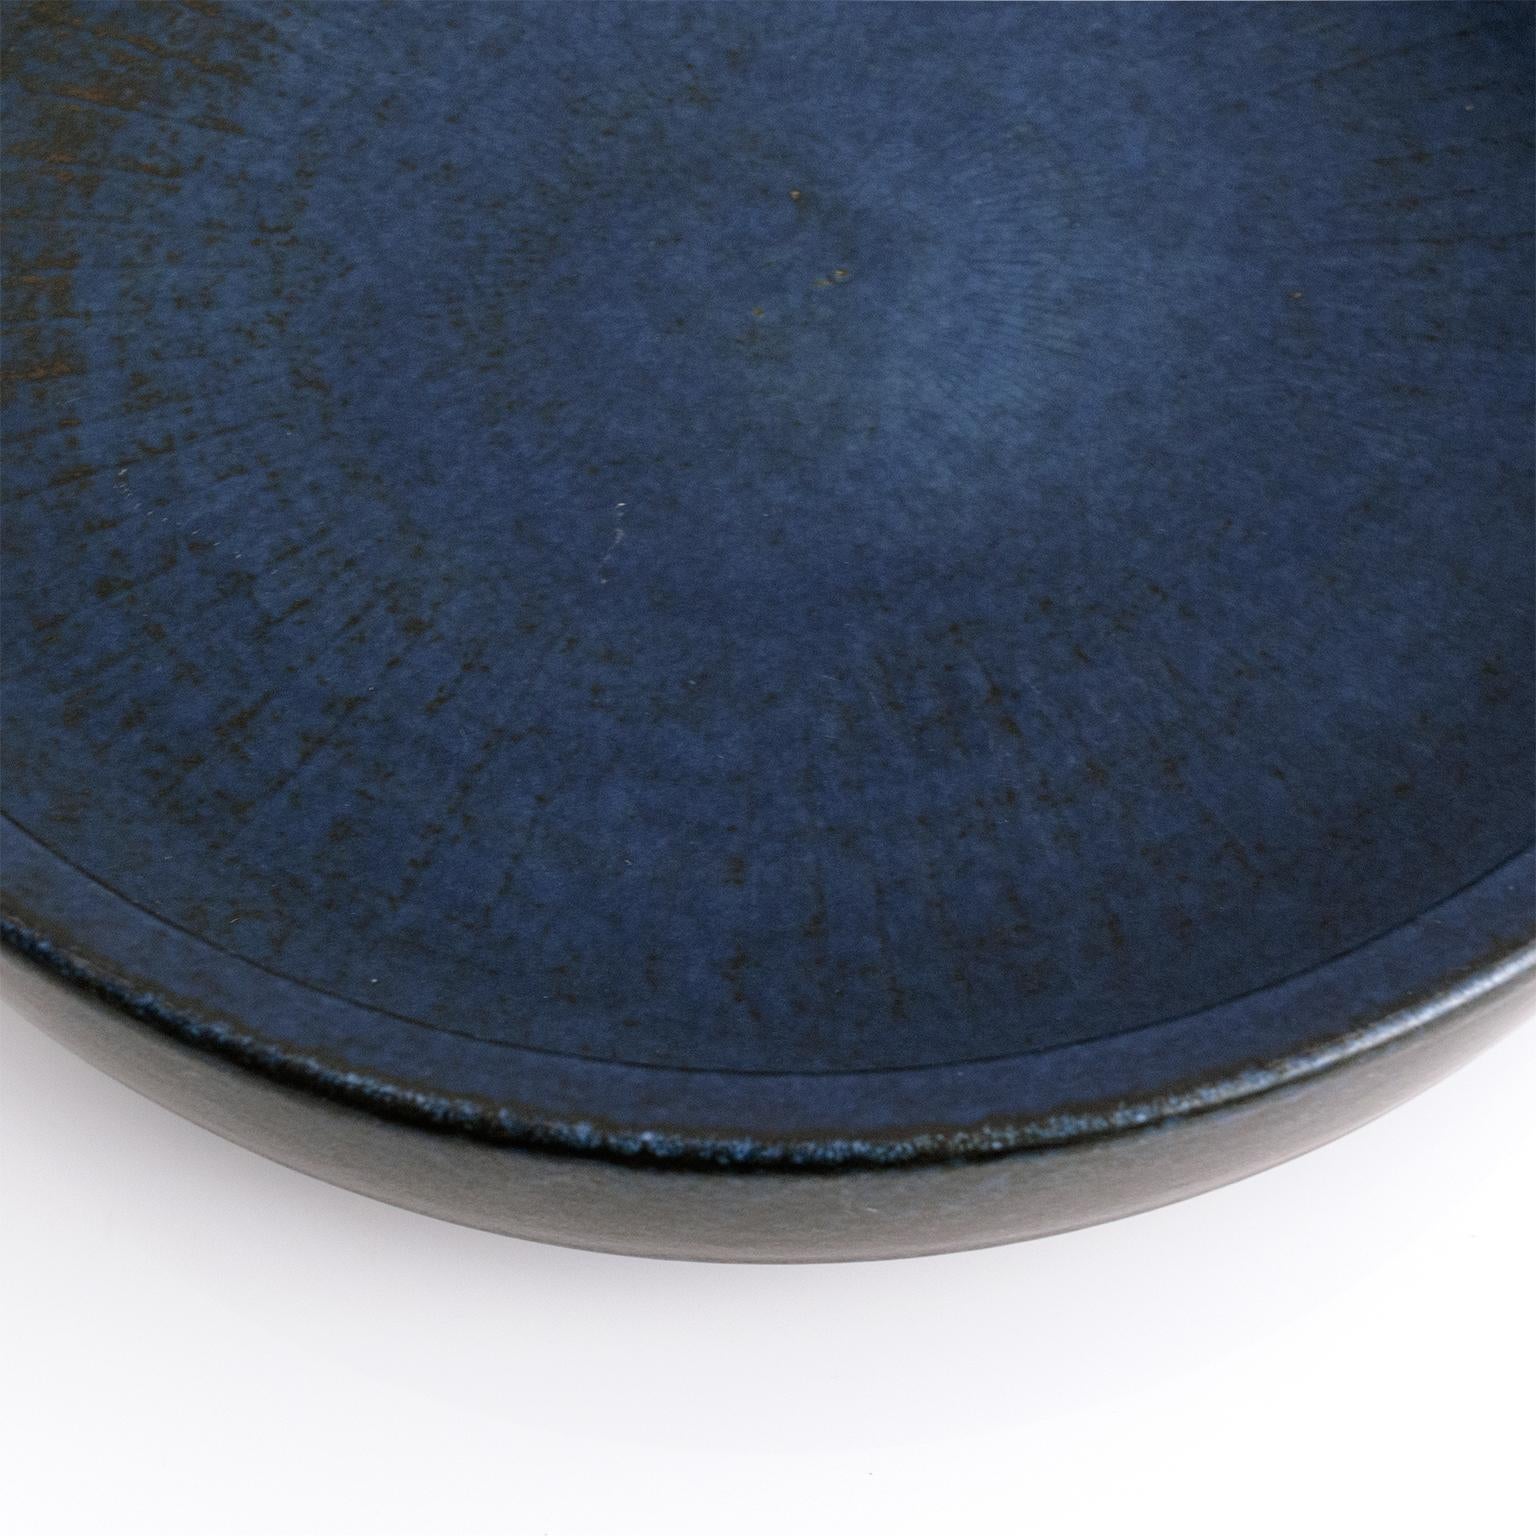 Hand-Crafted Carl-Harry Stålhane large blue bowl, Rorstrand Studio, Sweden, 1960